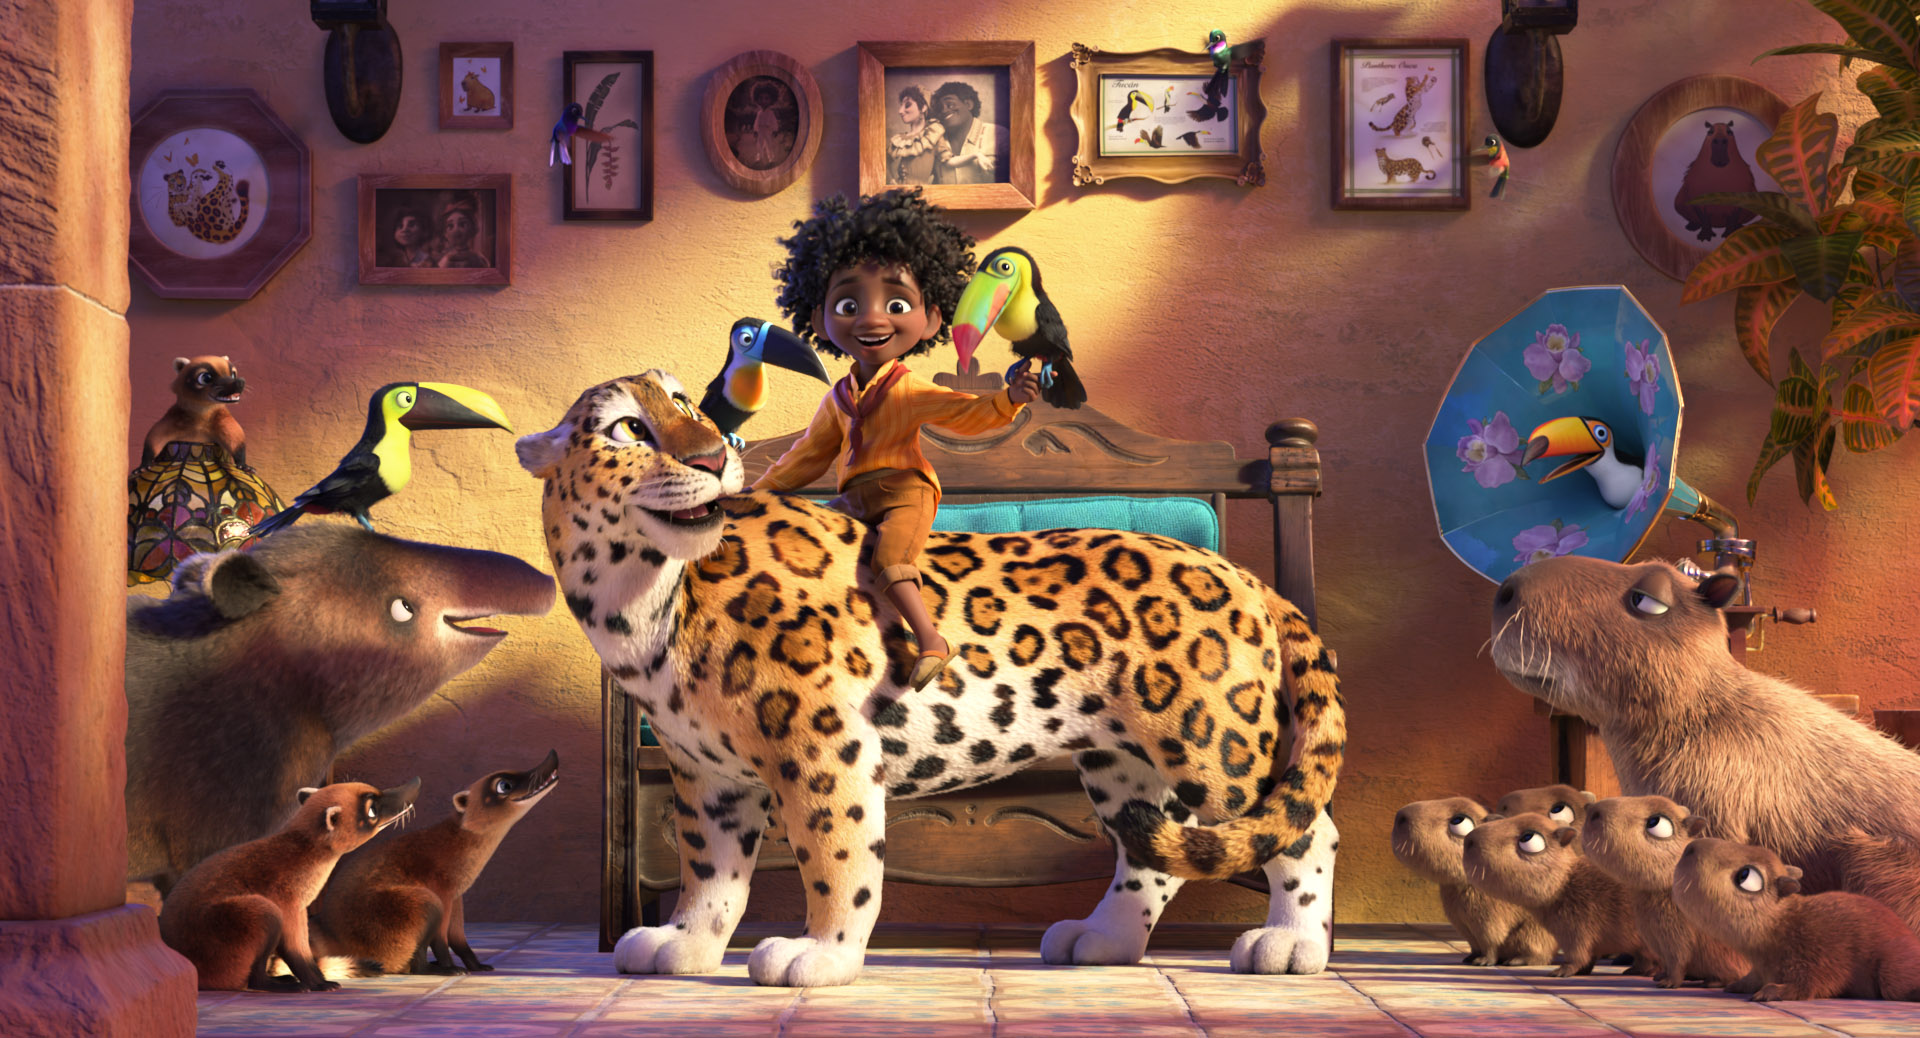 New Trailer and Poster for Walt Disney Animation Studios "Encanto"